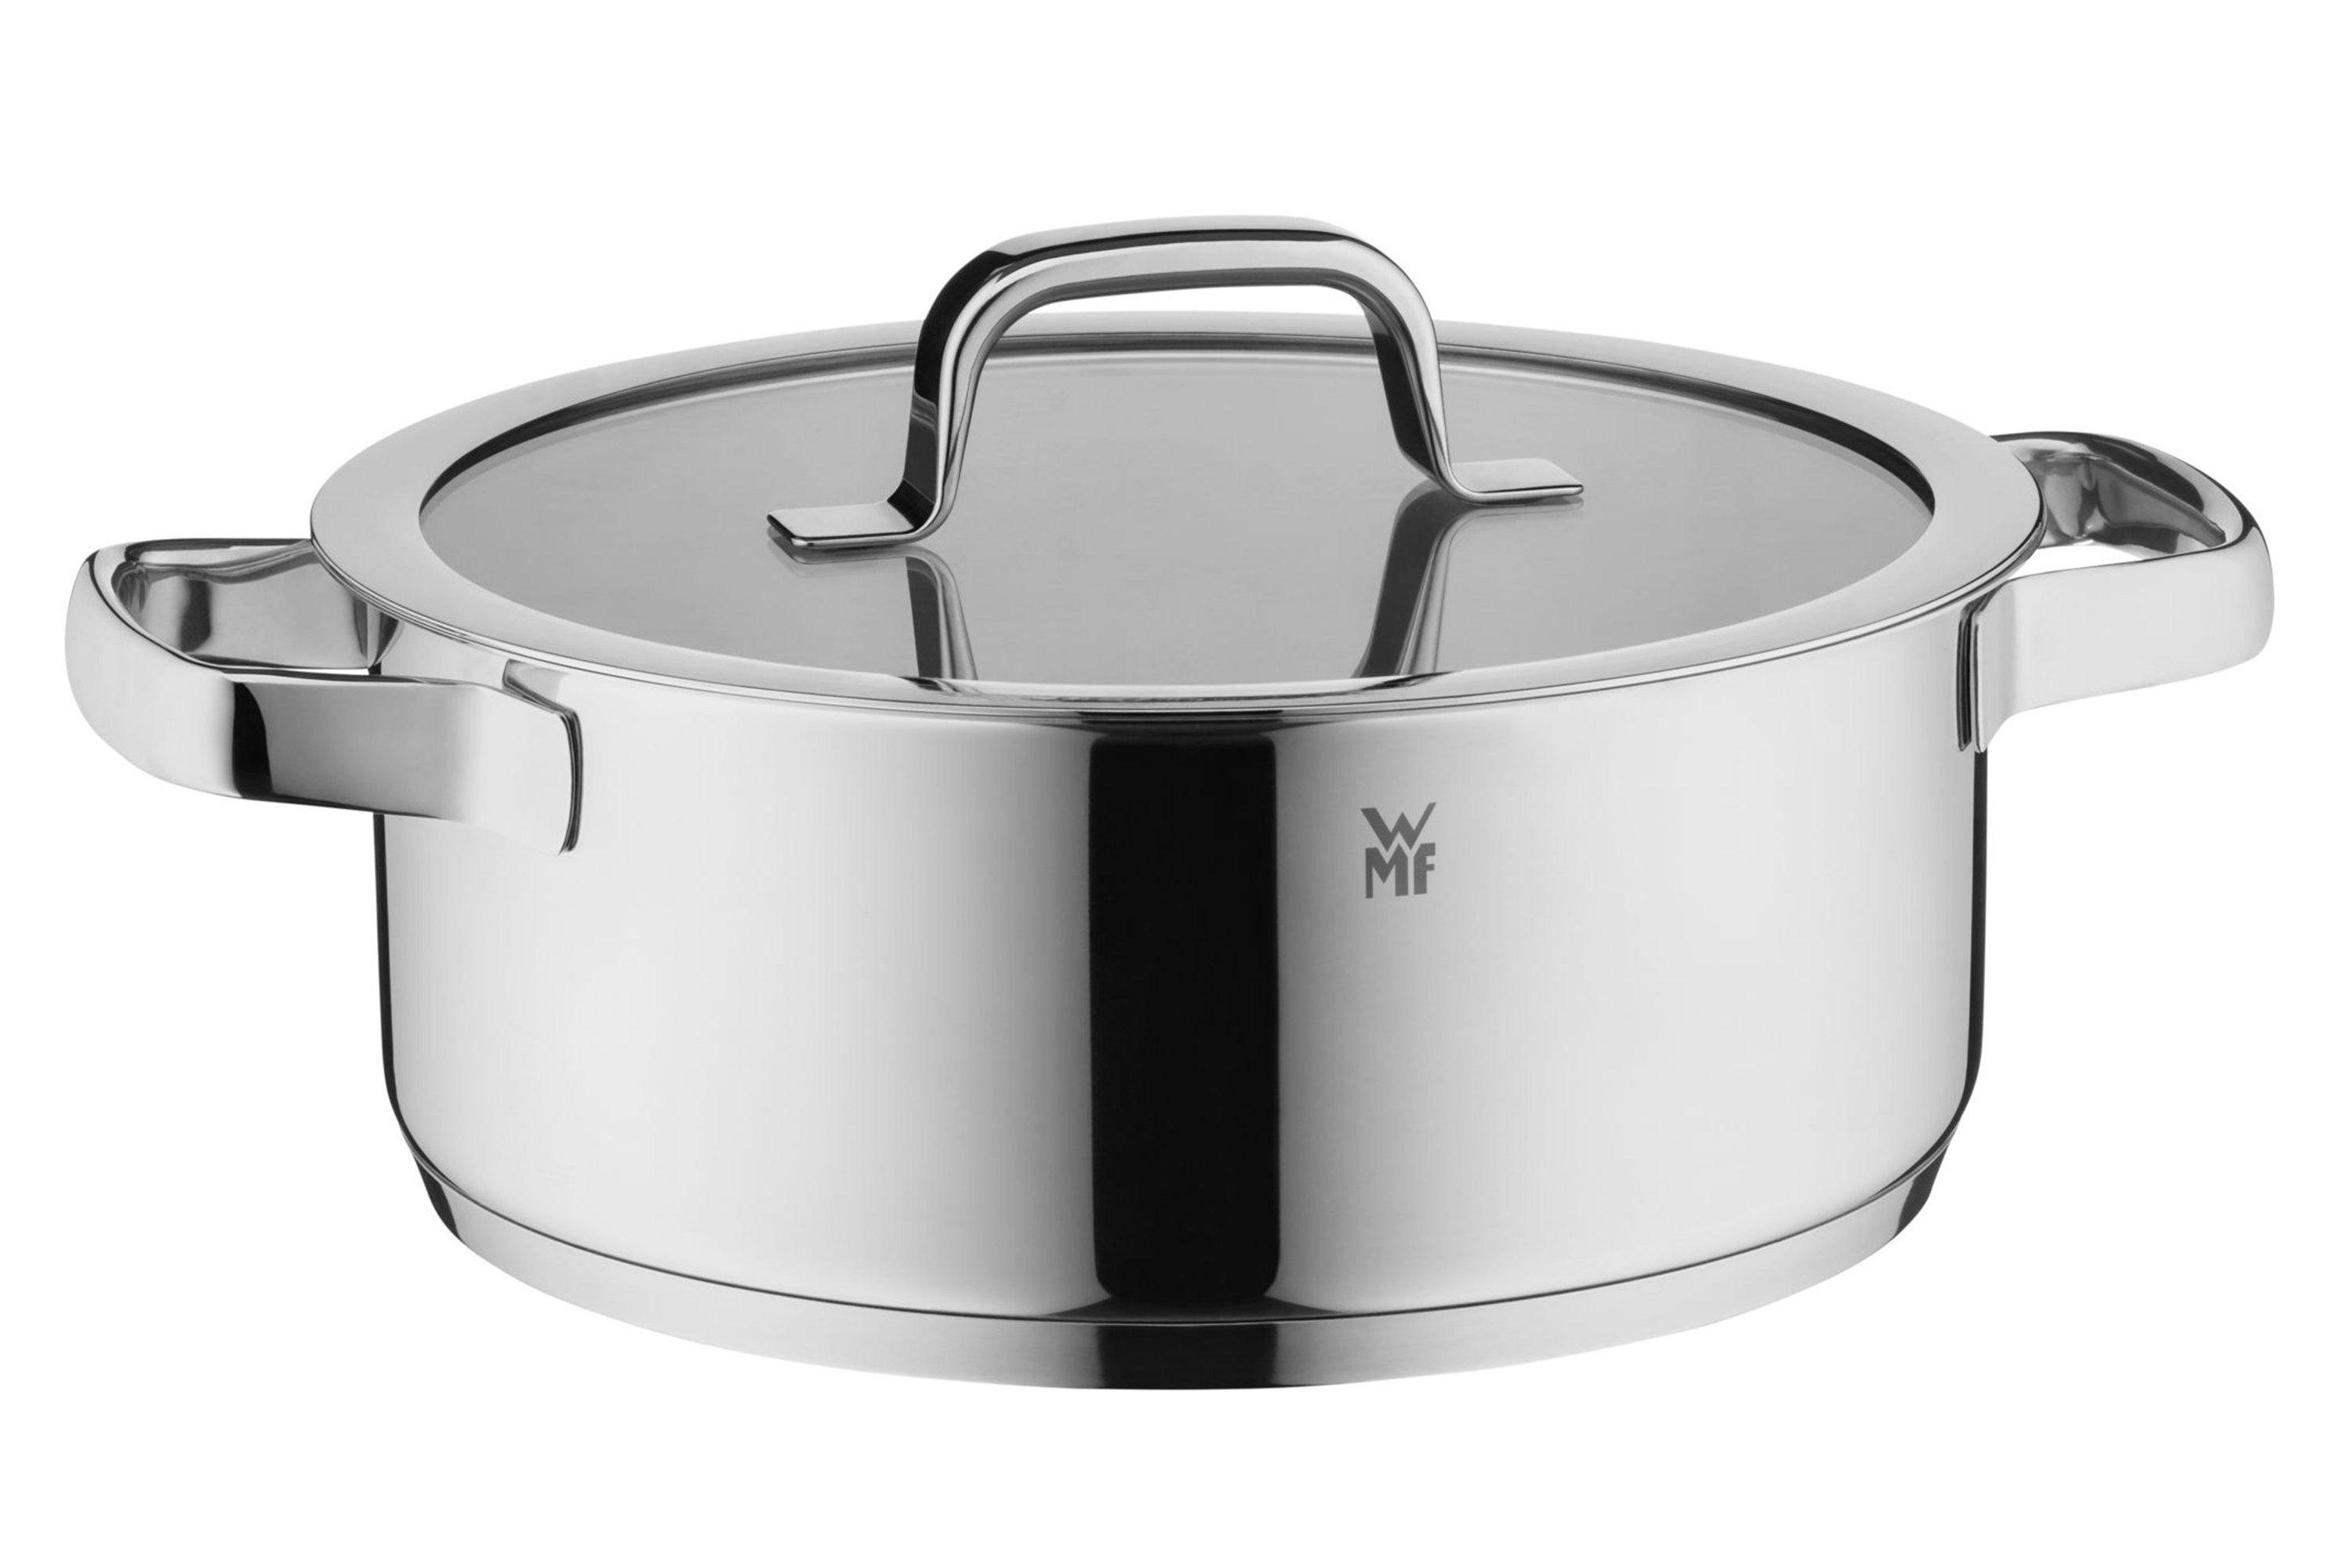 WMF Compact Cuisine 0798546380 4-piece pan set  Advantageously shopping at